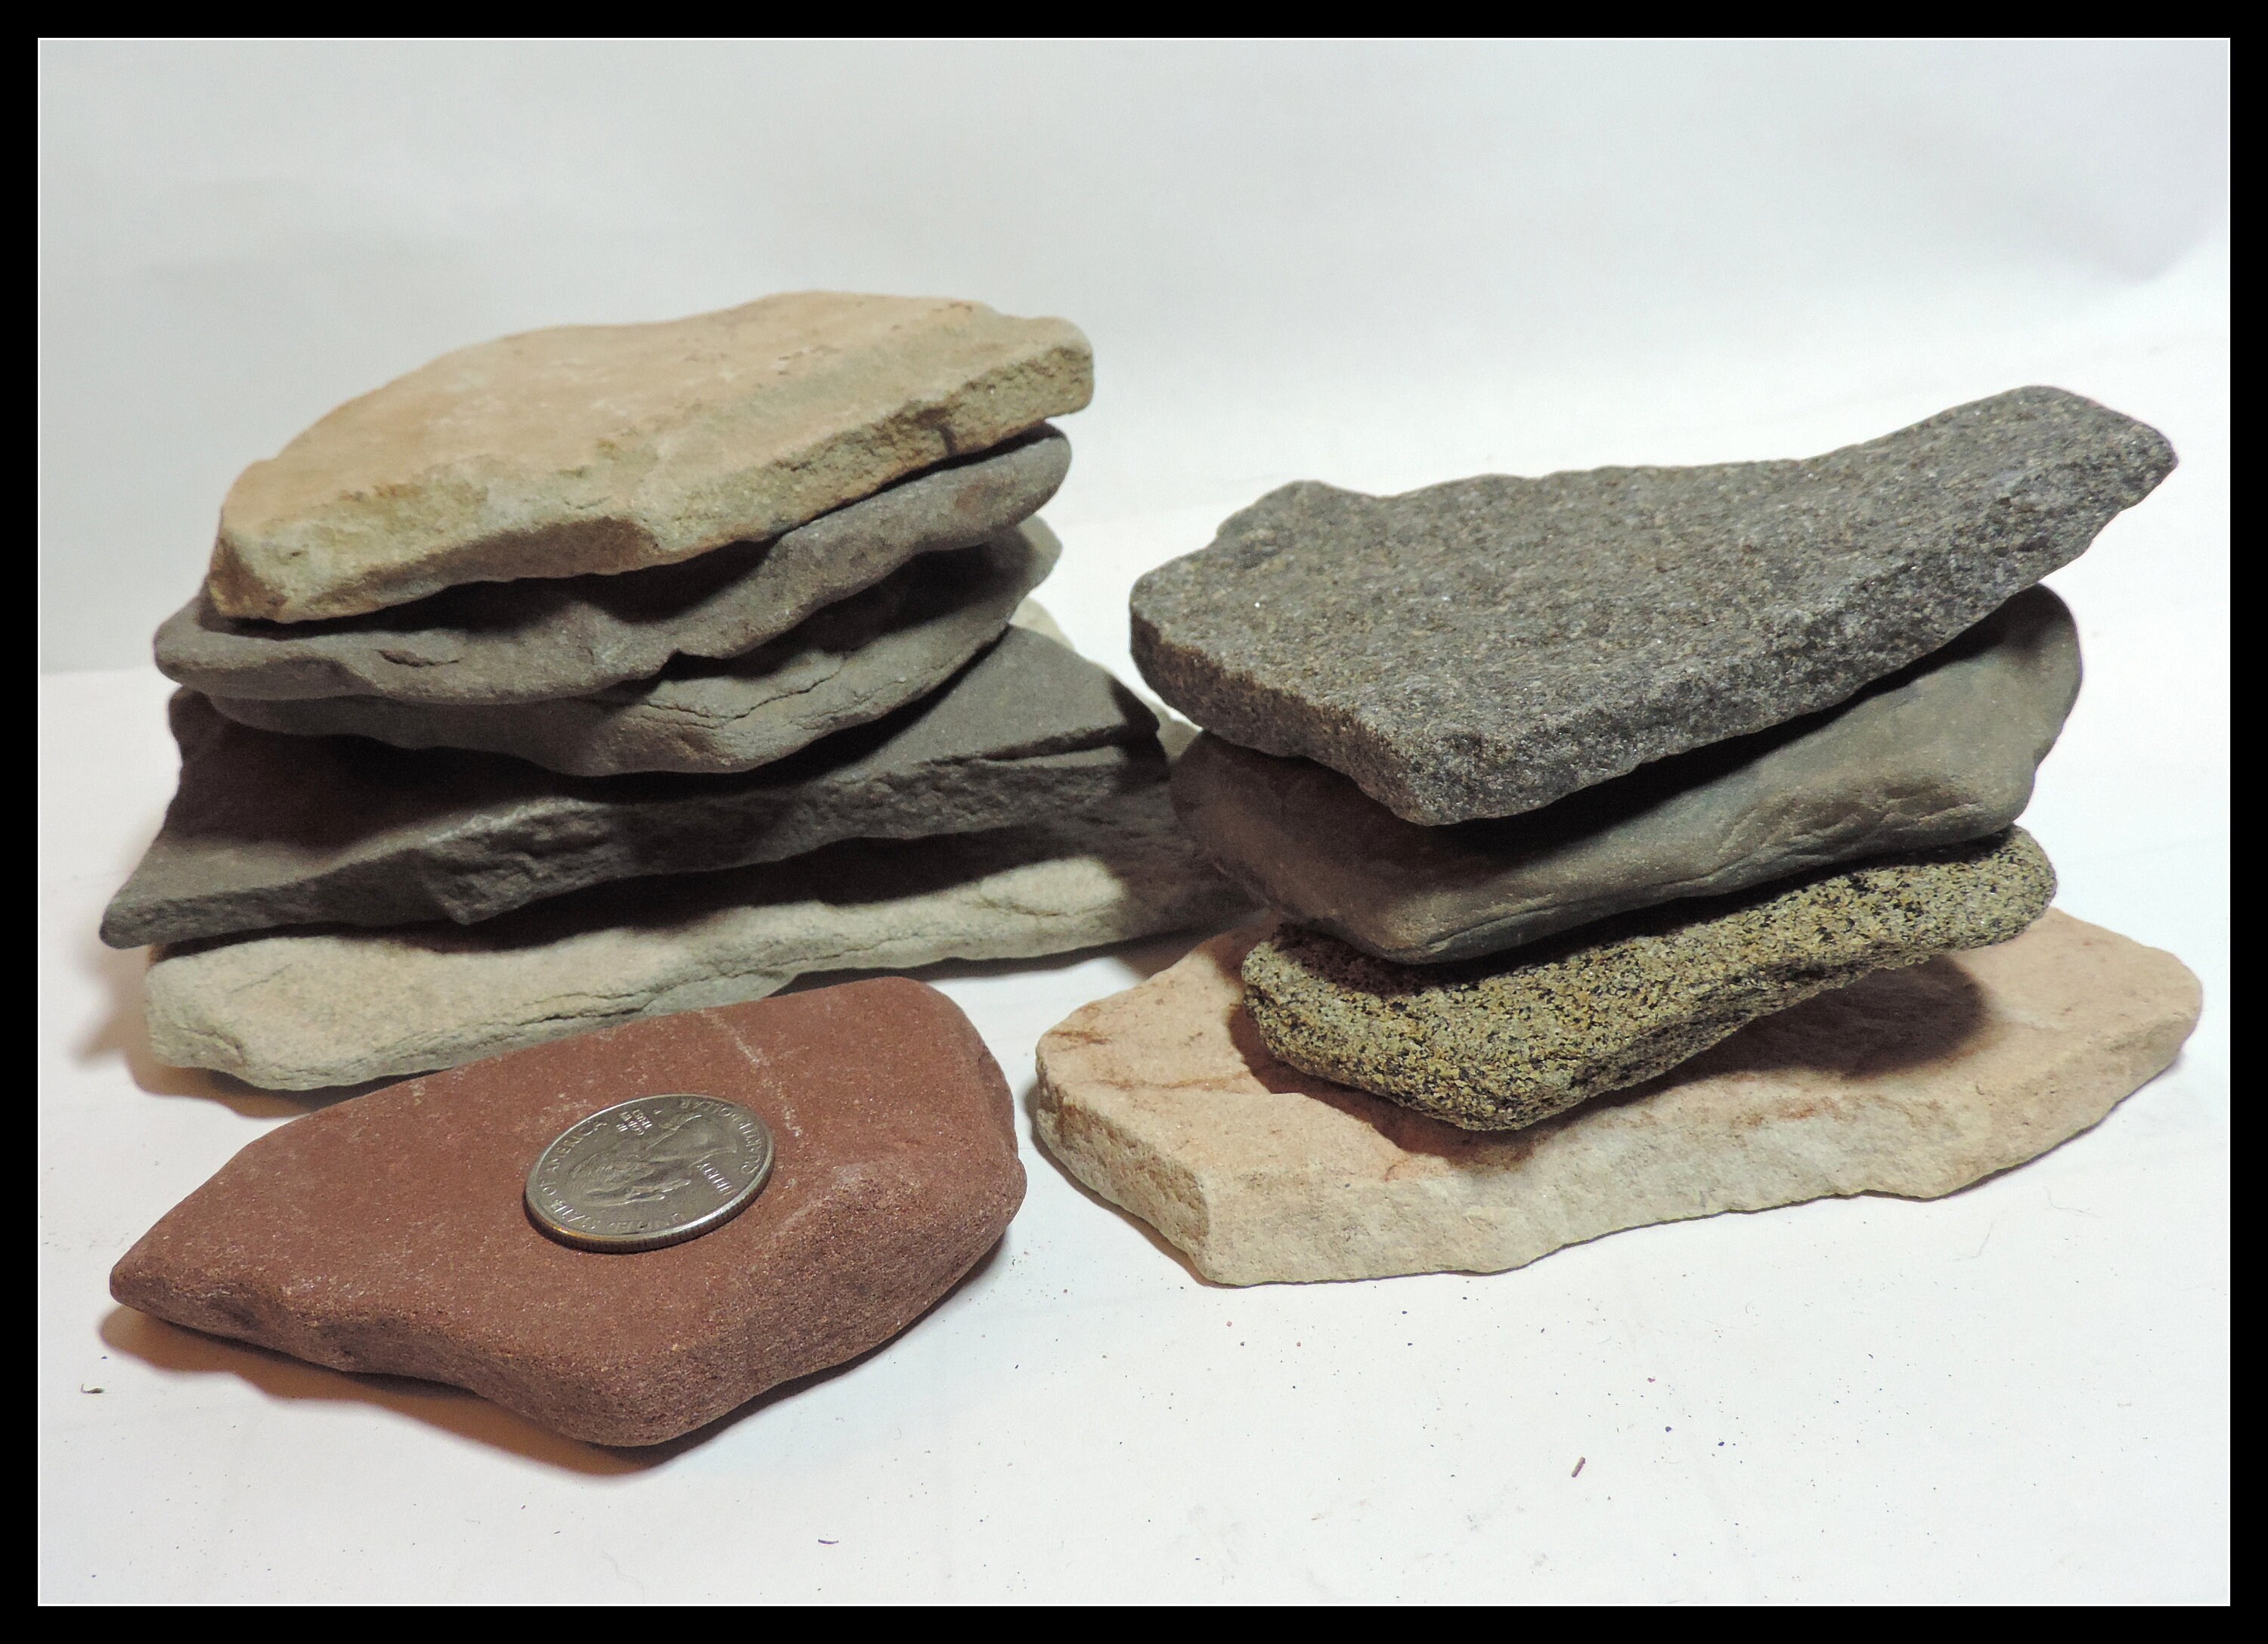 Pet Supplies : Capcouriers Small Slate Rocks - Flat Rocks - 4